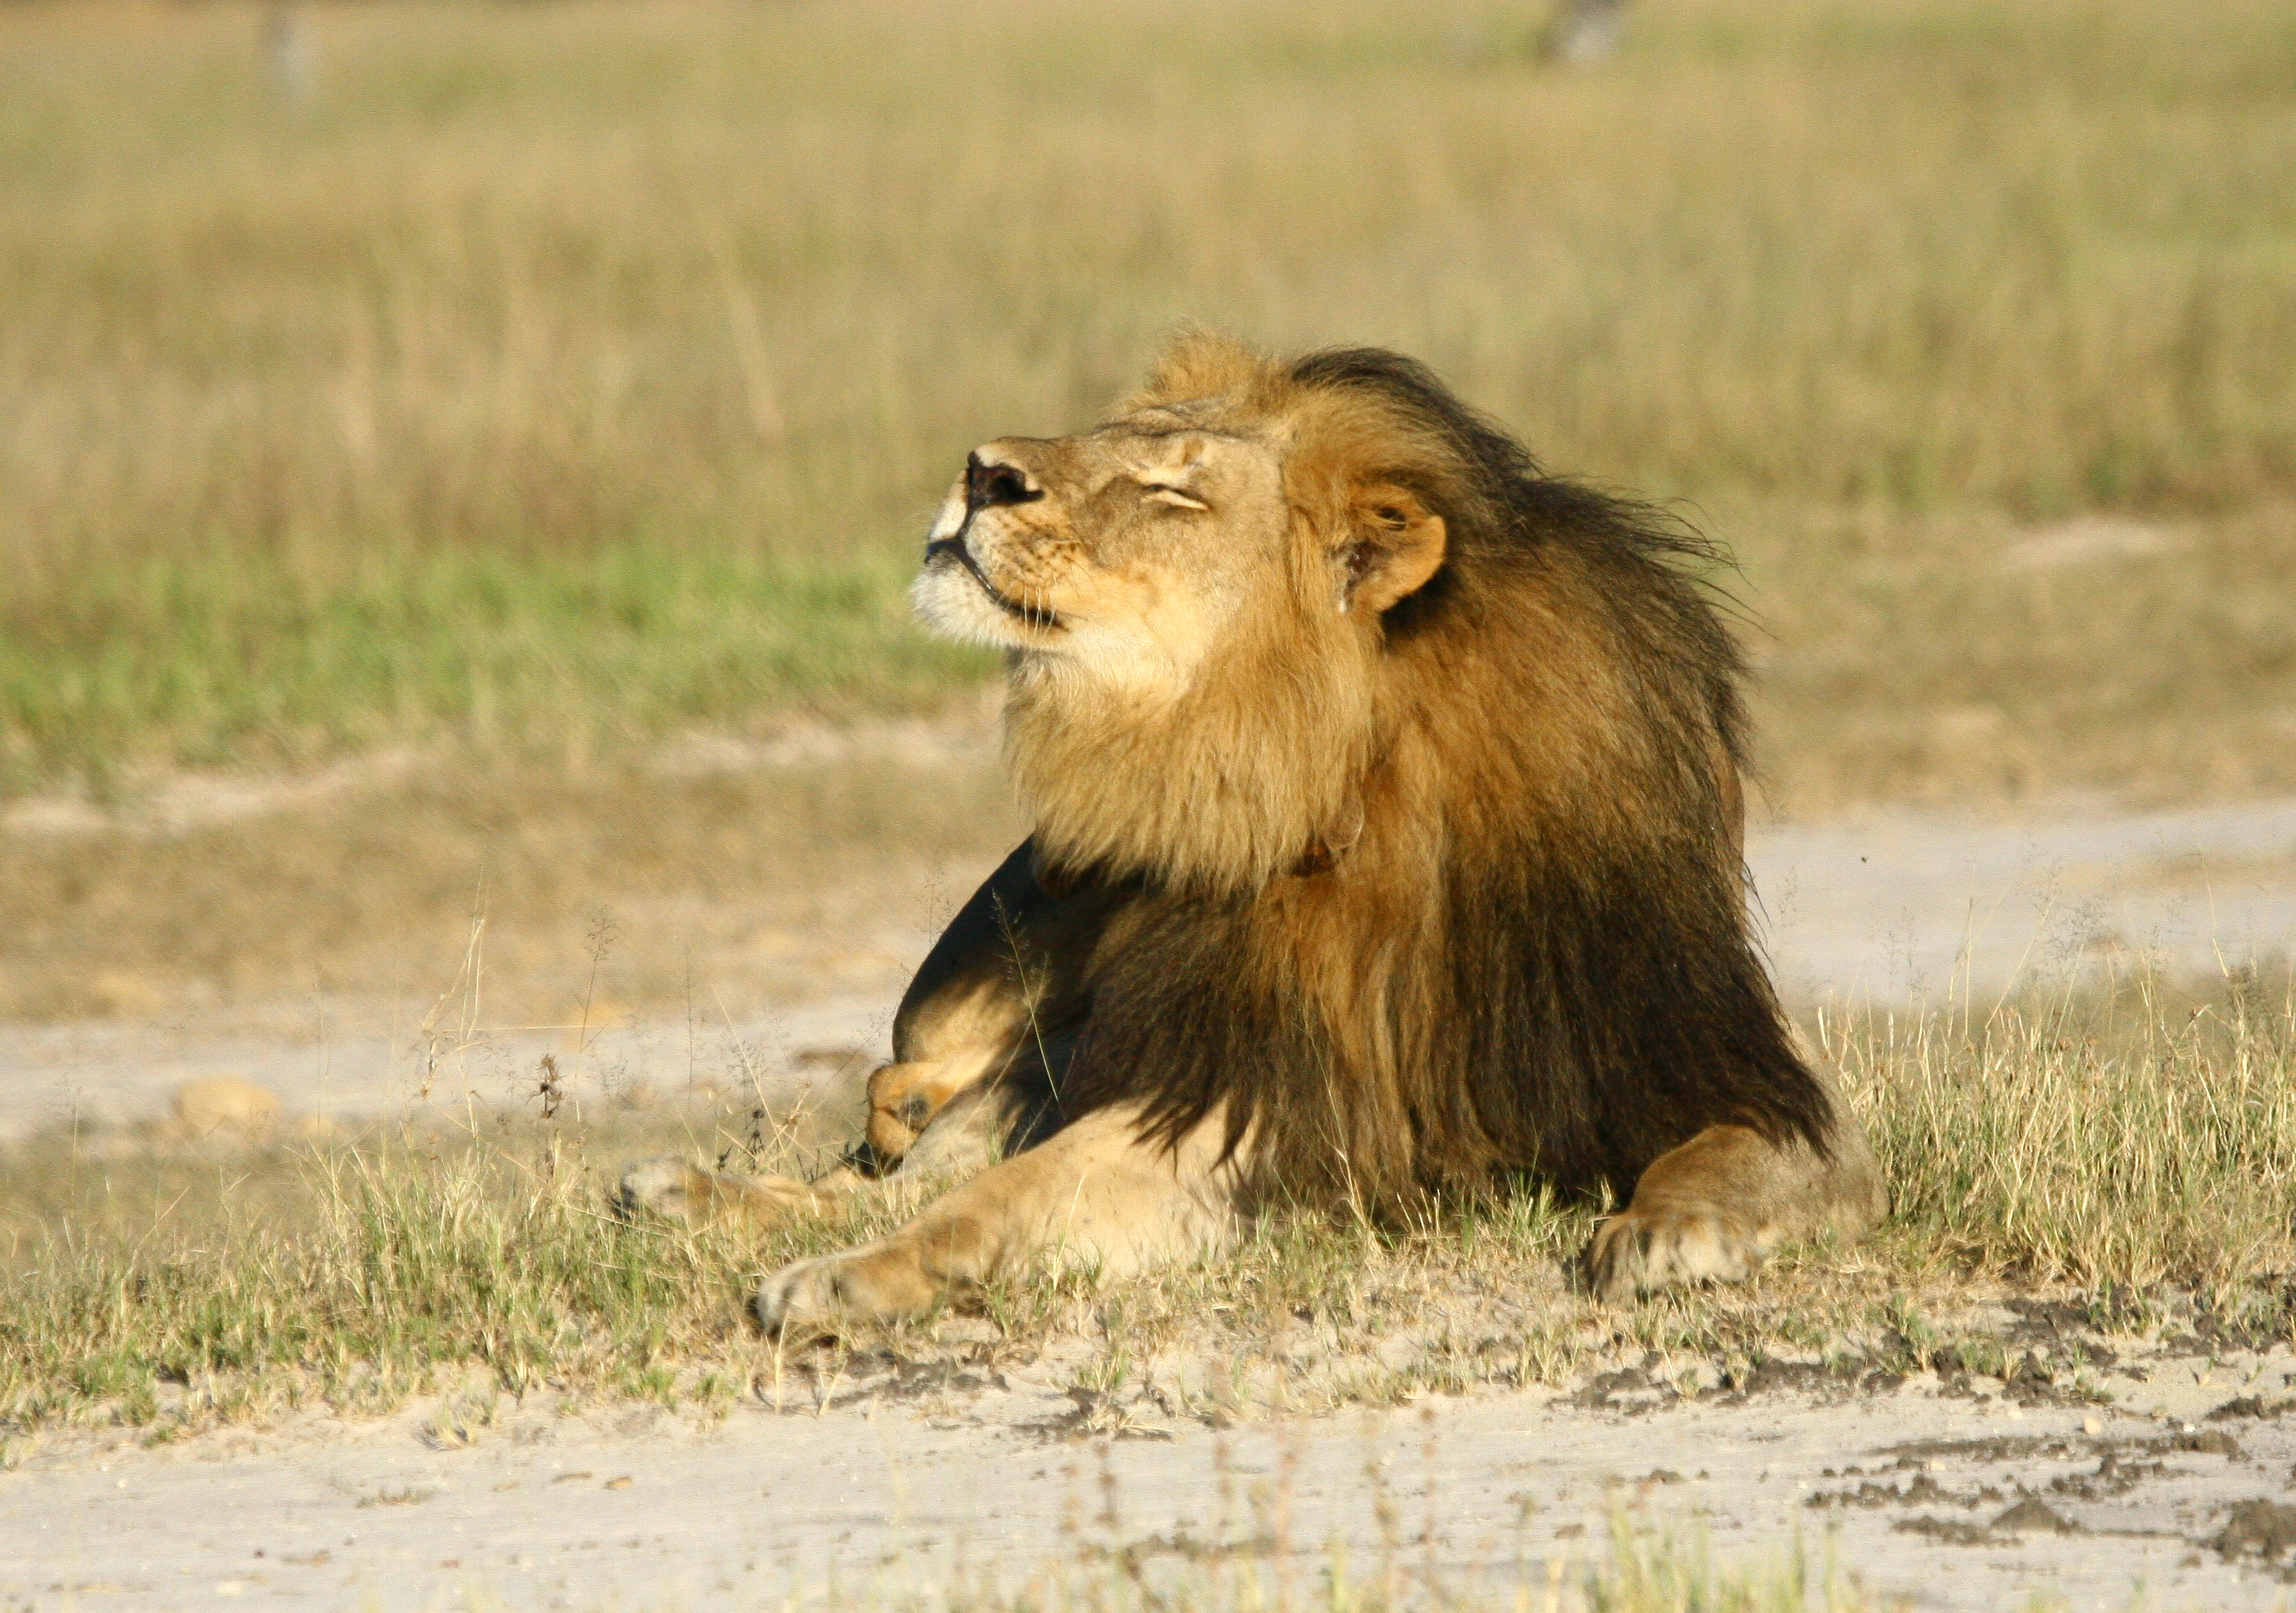 Cecil the lion’s son Xanda also shot dead in Zimbabwe